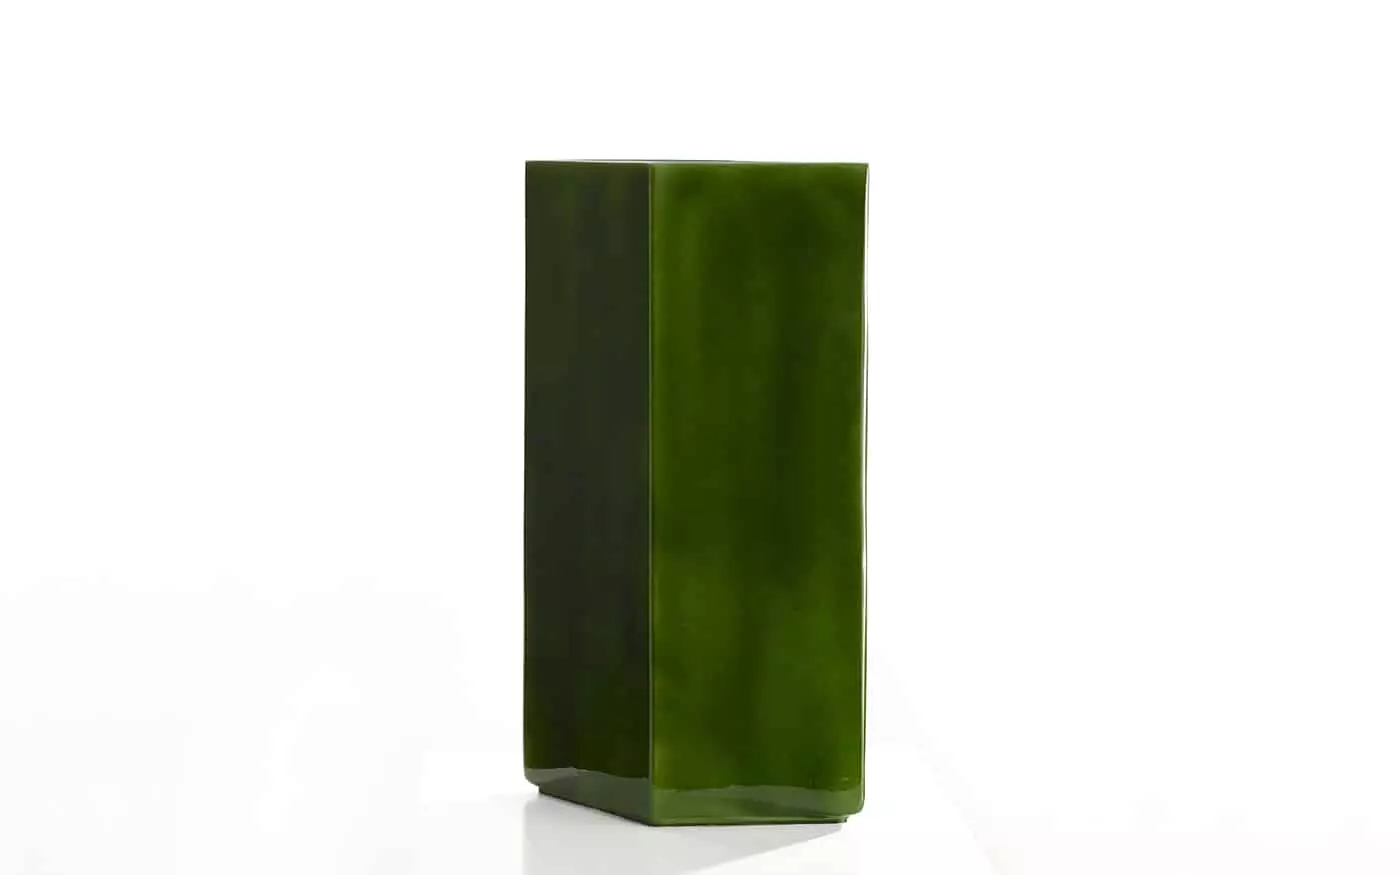 Vase Losange 84 green - Ronan & Erwan Bouroullec - Wall light - Galerie kreo